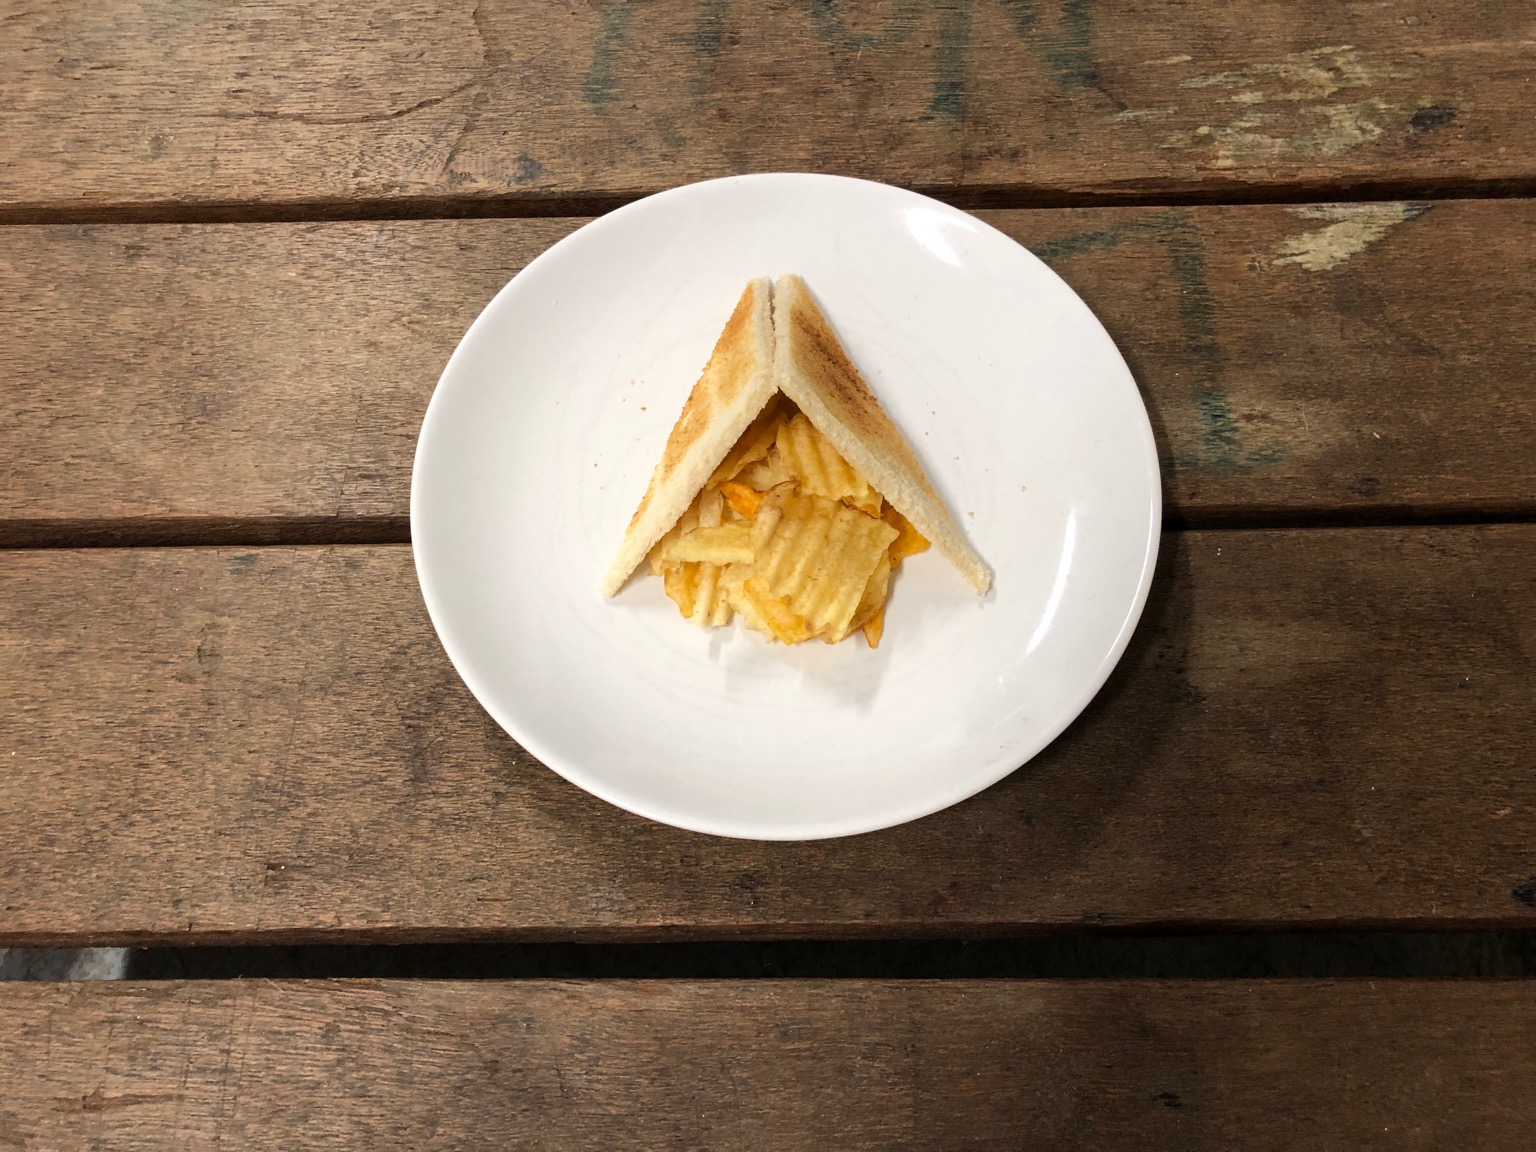 Diagonally-cut toast leaning above crisps